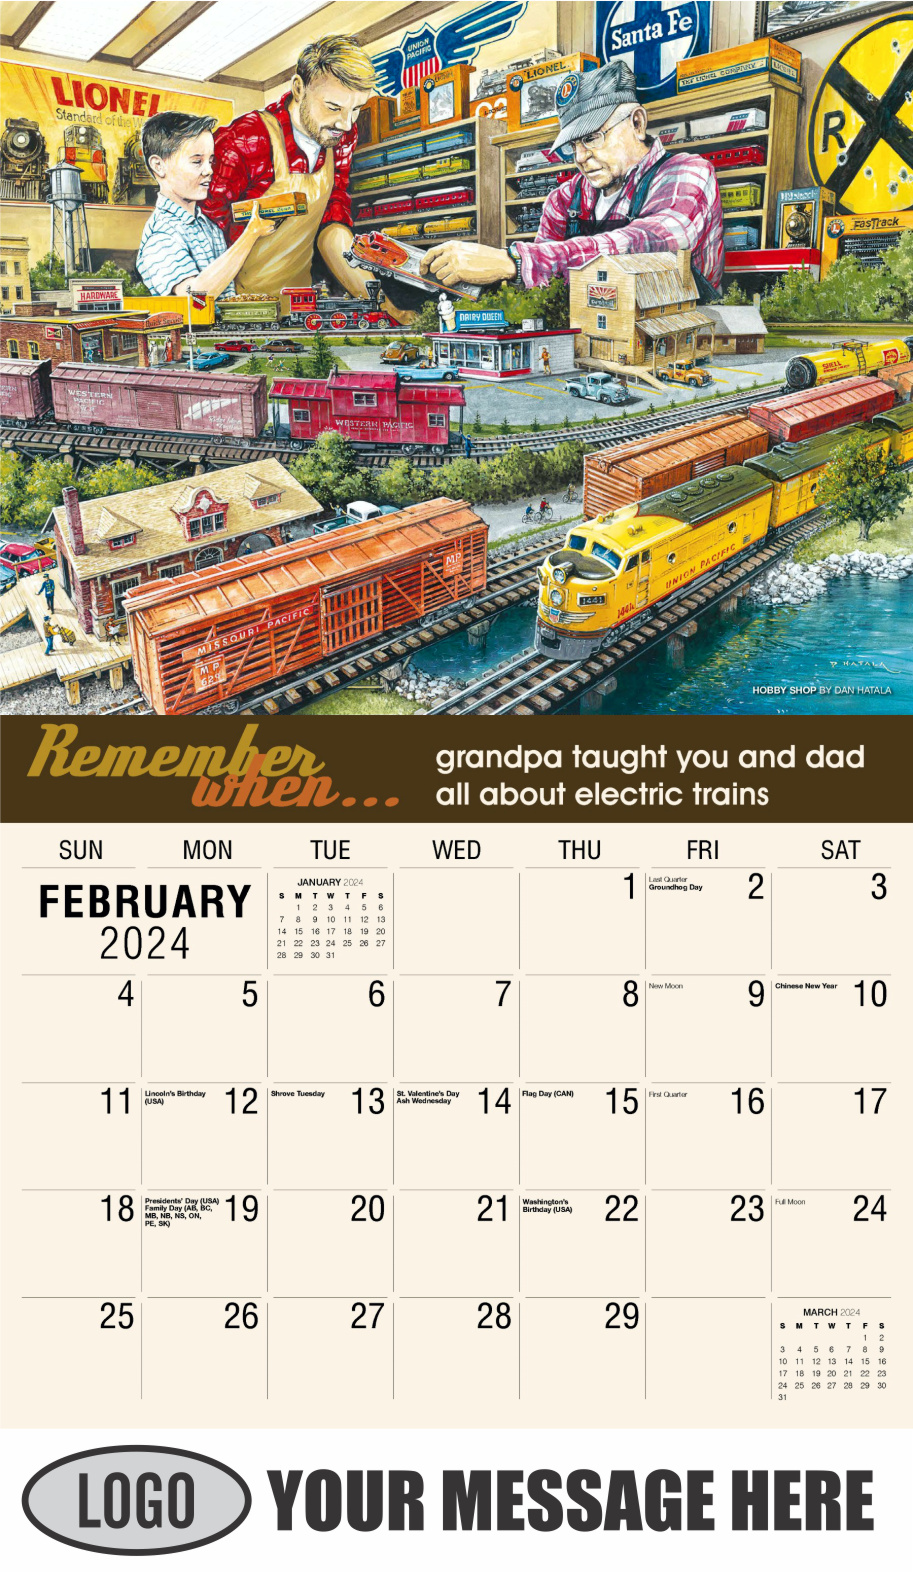 Remember When 2024 Business Advertising Calendar - February